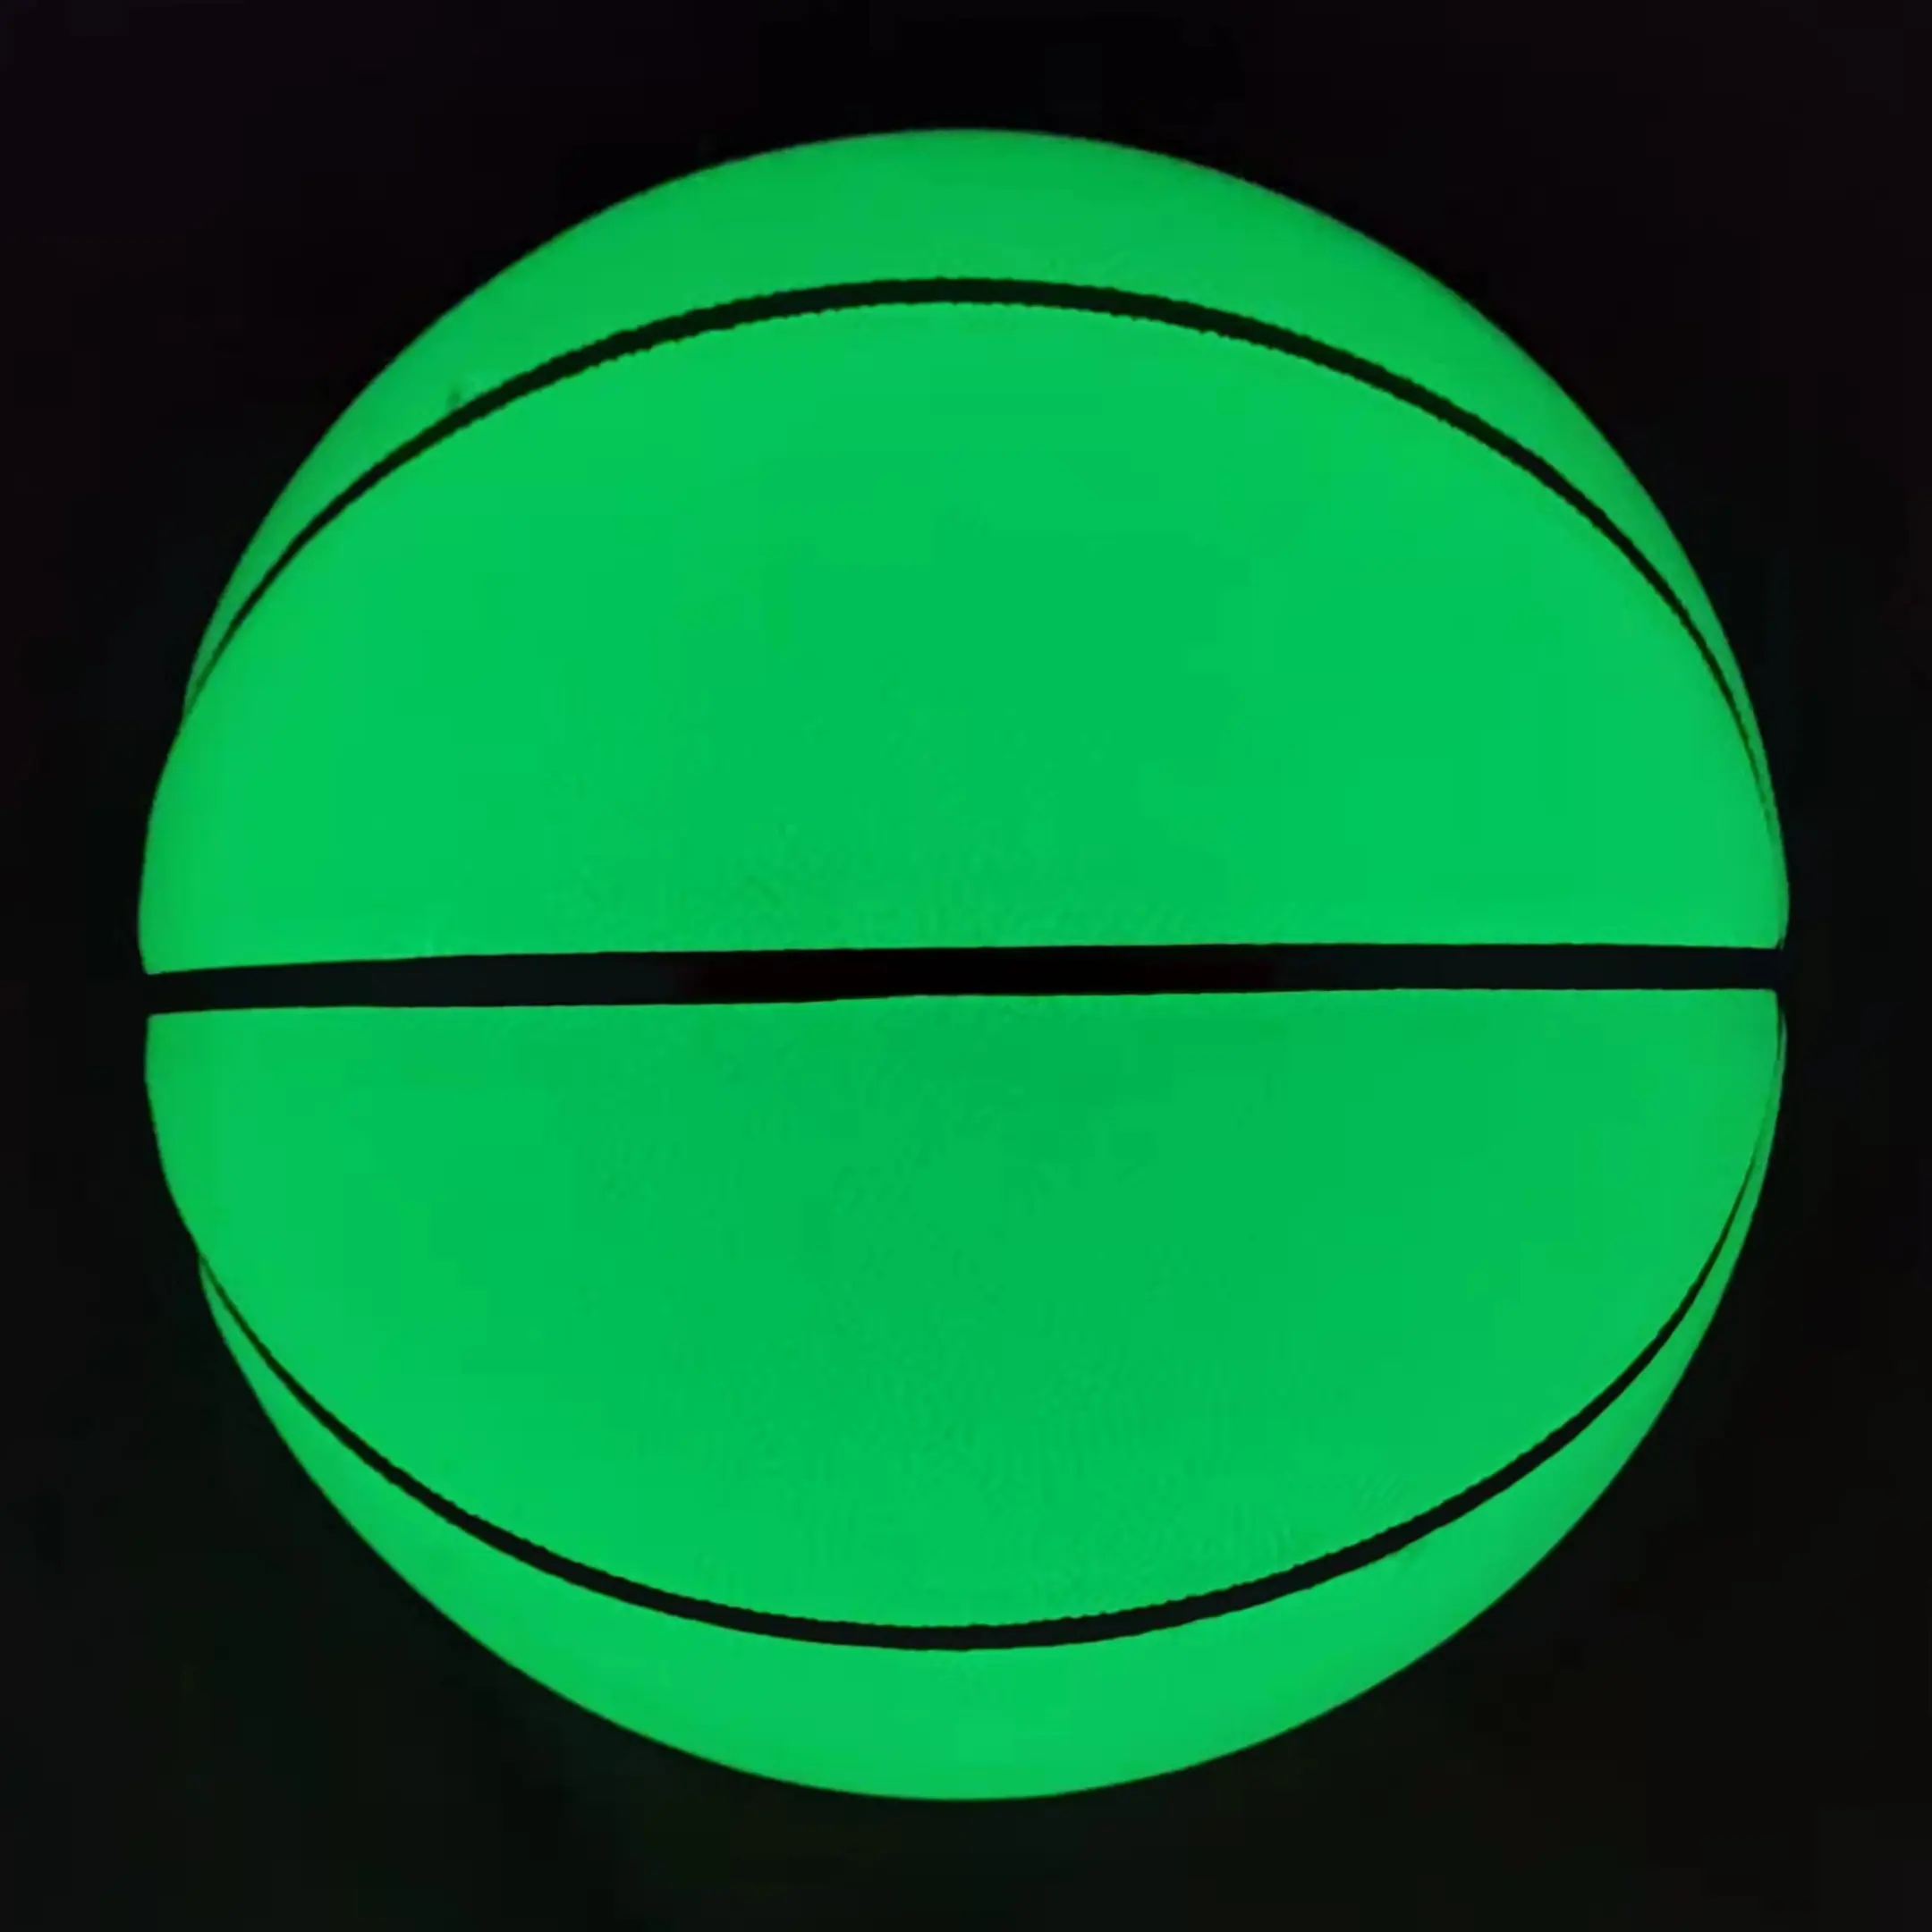 अनुकूलित चमकदार होलोग्राफिक ग्रीन बास्केटबॉल फैक्टरी प्रत्यक्ष चिंतनशील चमकदार बास्केटबॉल OEM लोगो रोशनी अप बास्केटबॉल